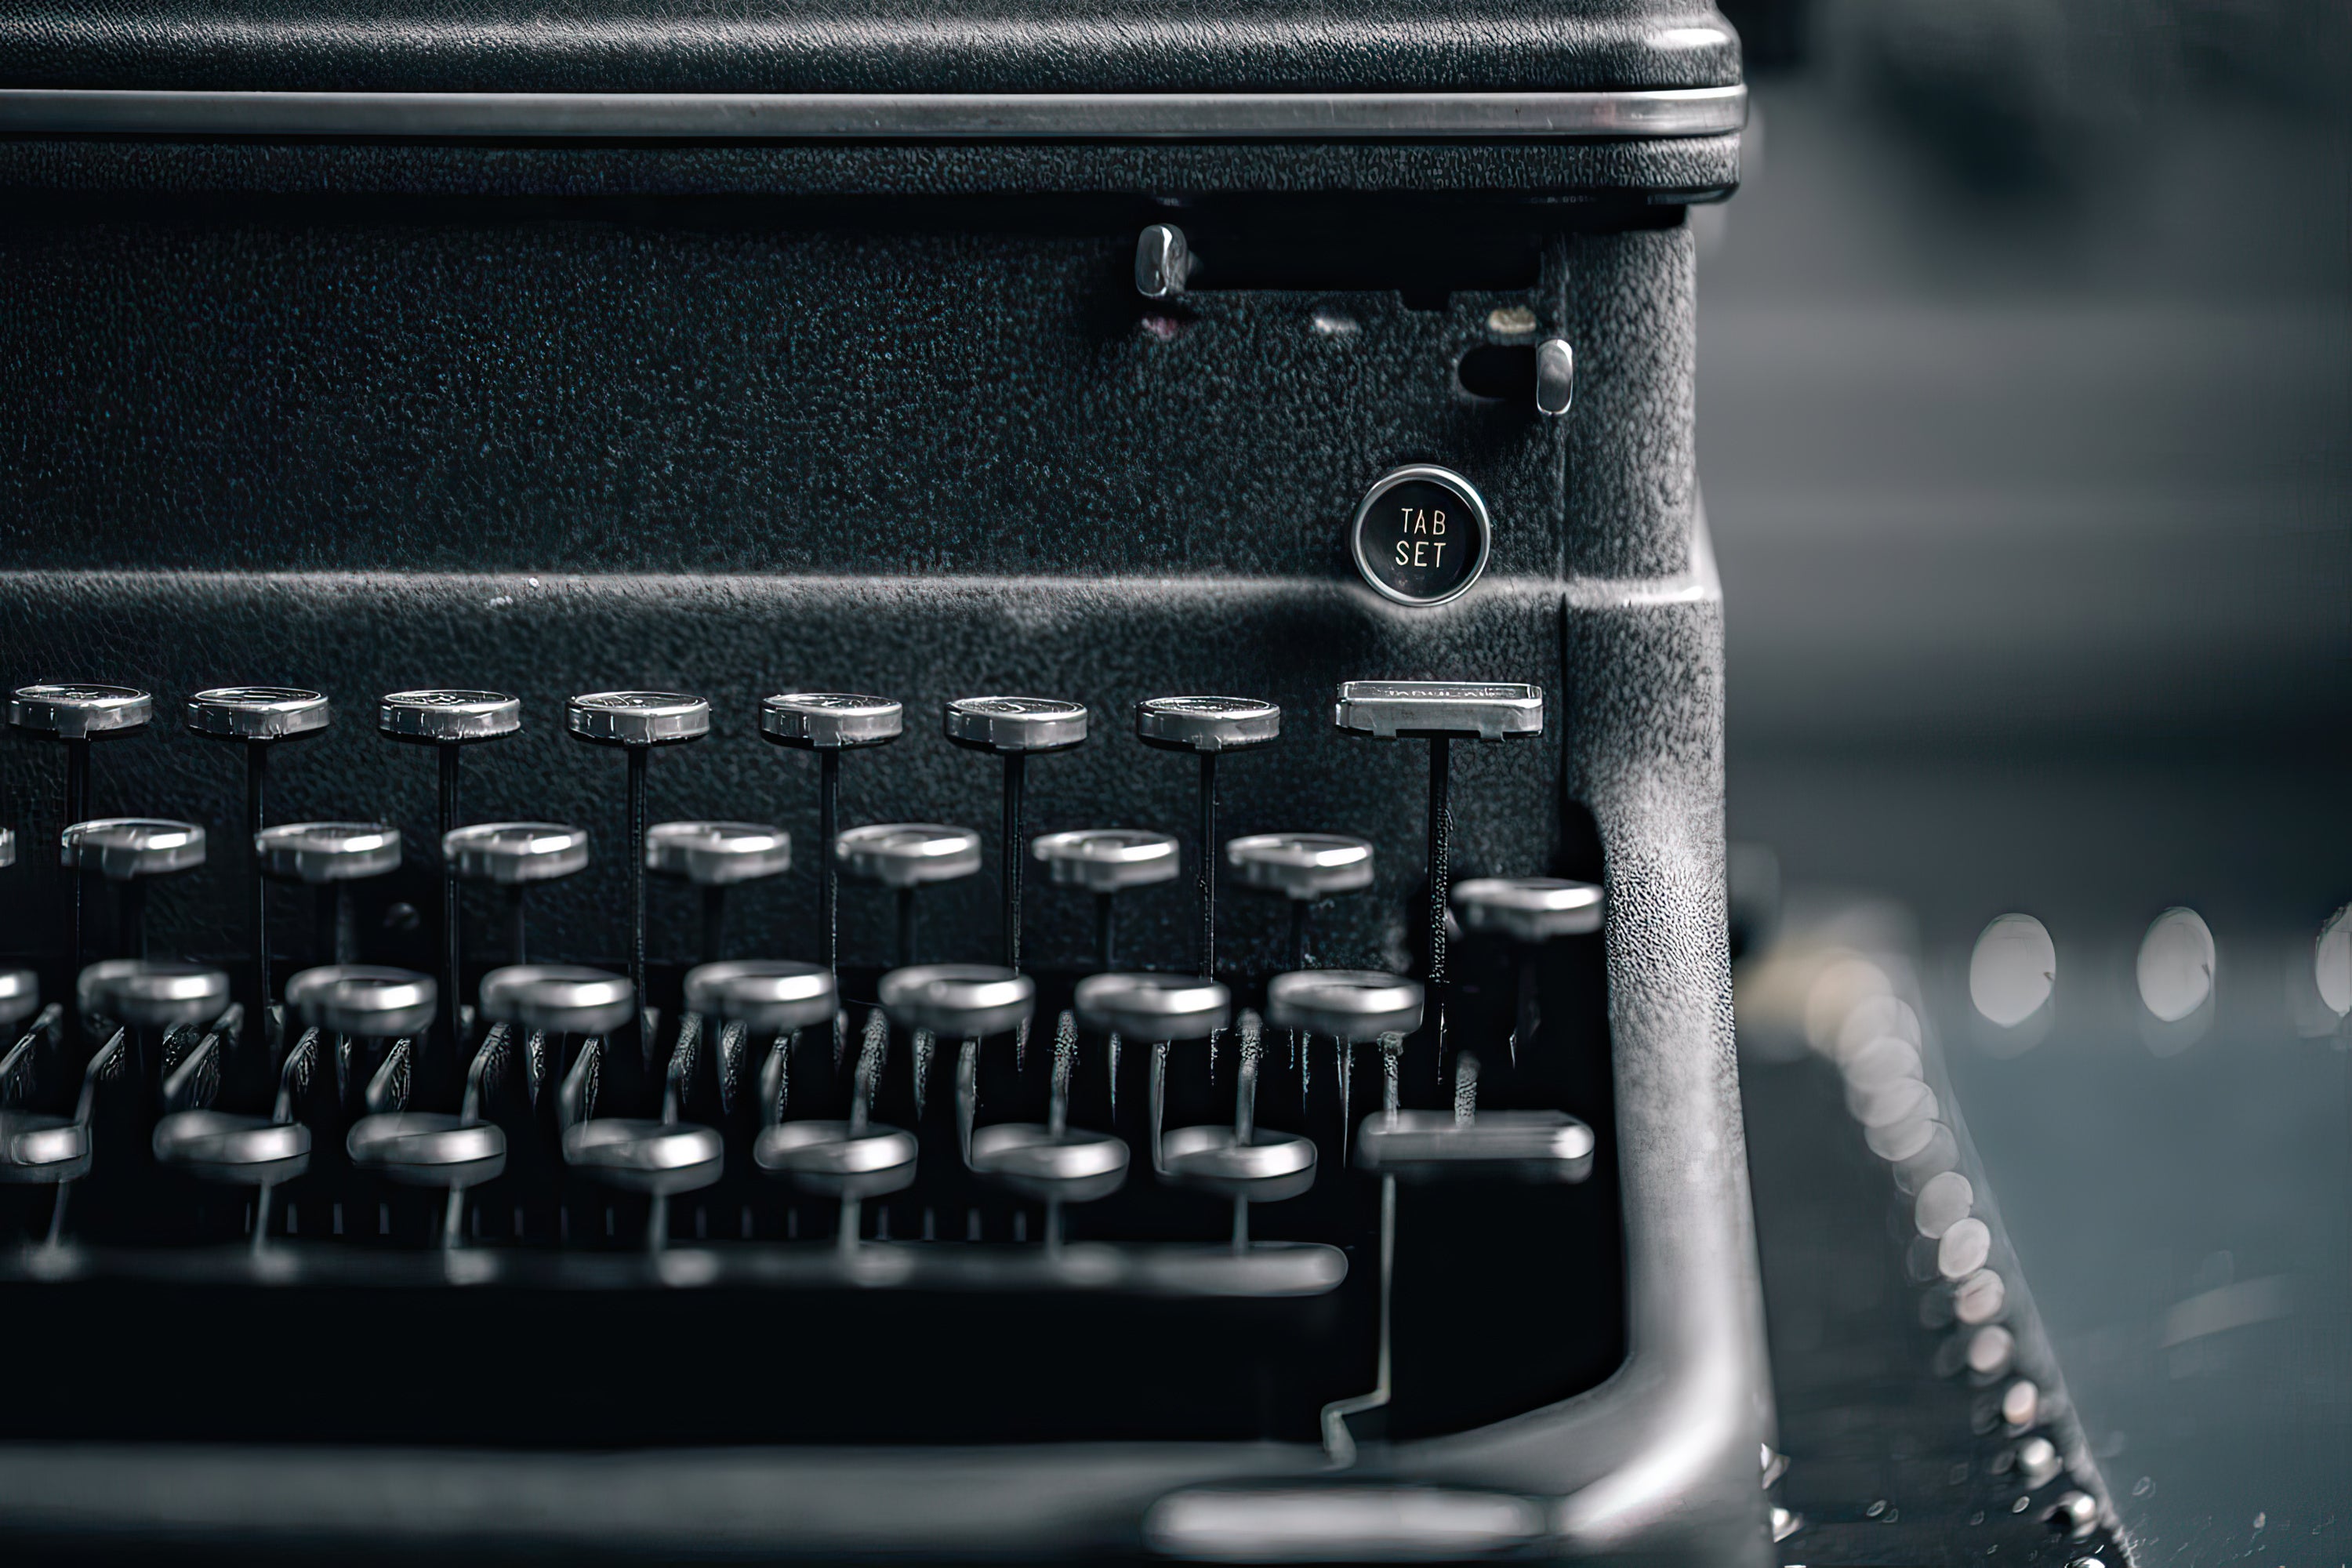 2019 True Story Showcase - Image of Vintage Typewriter